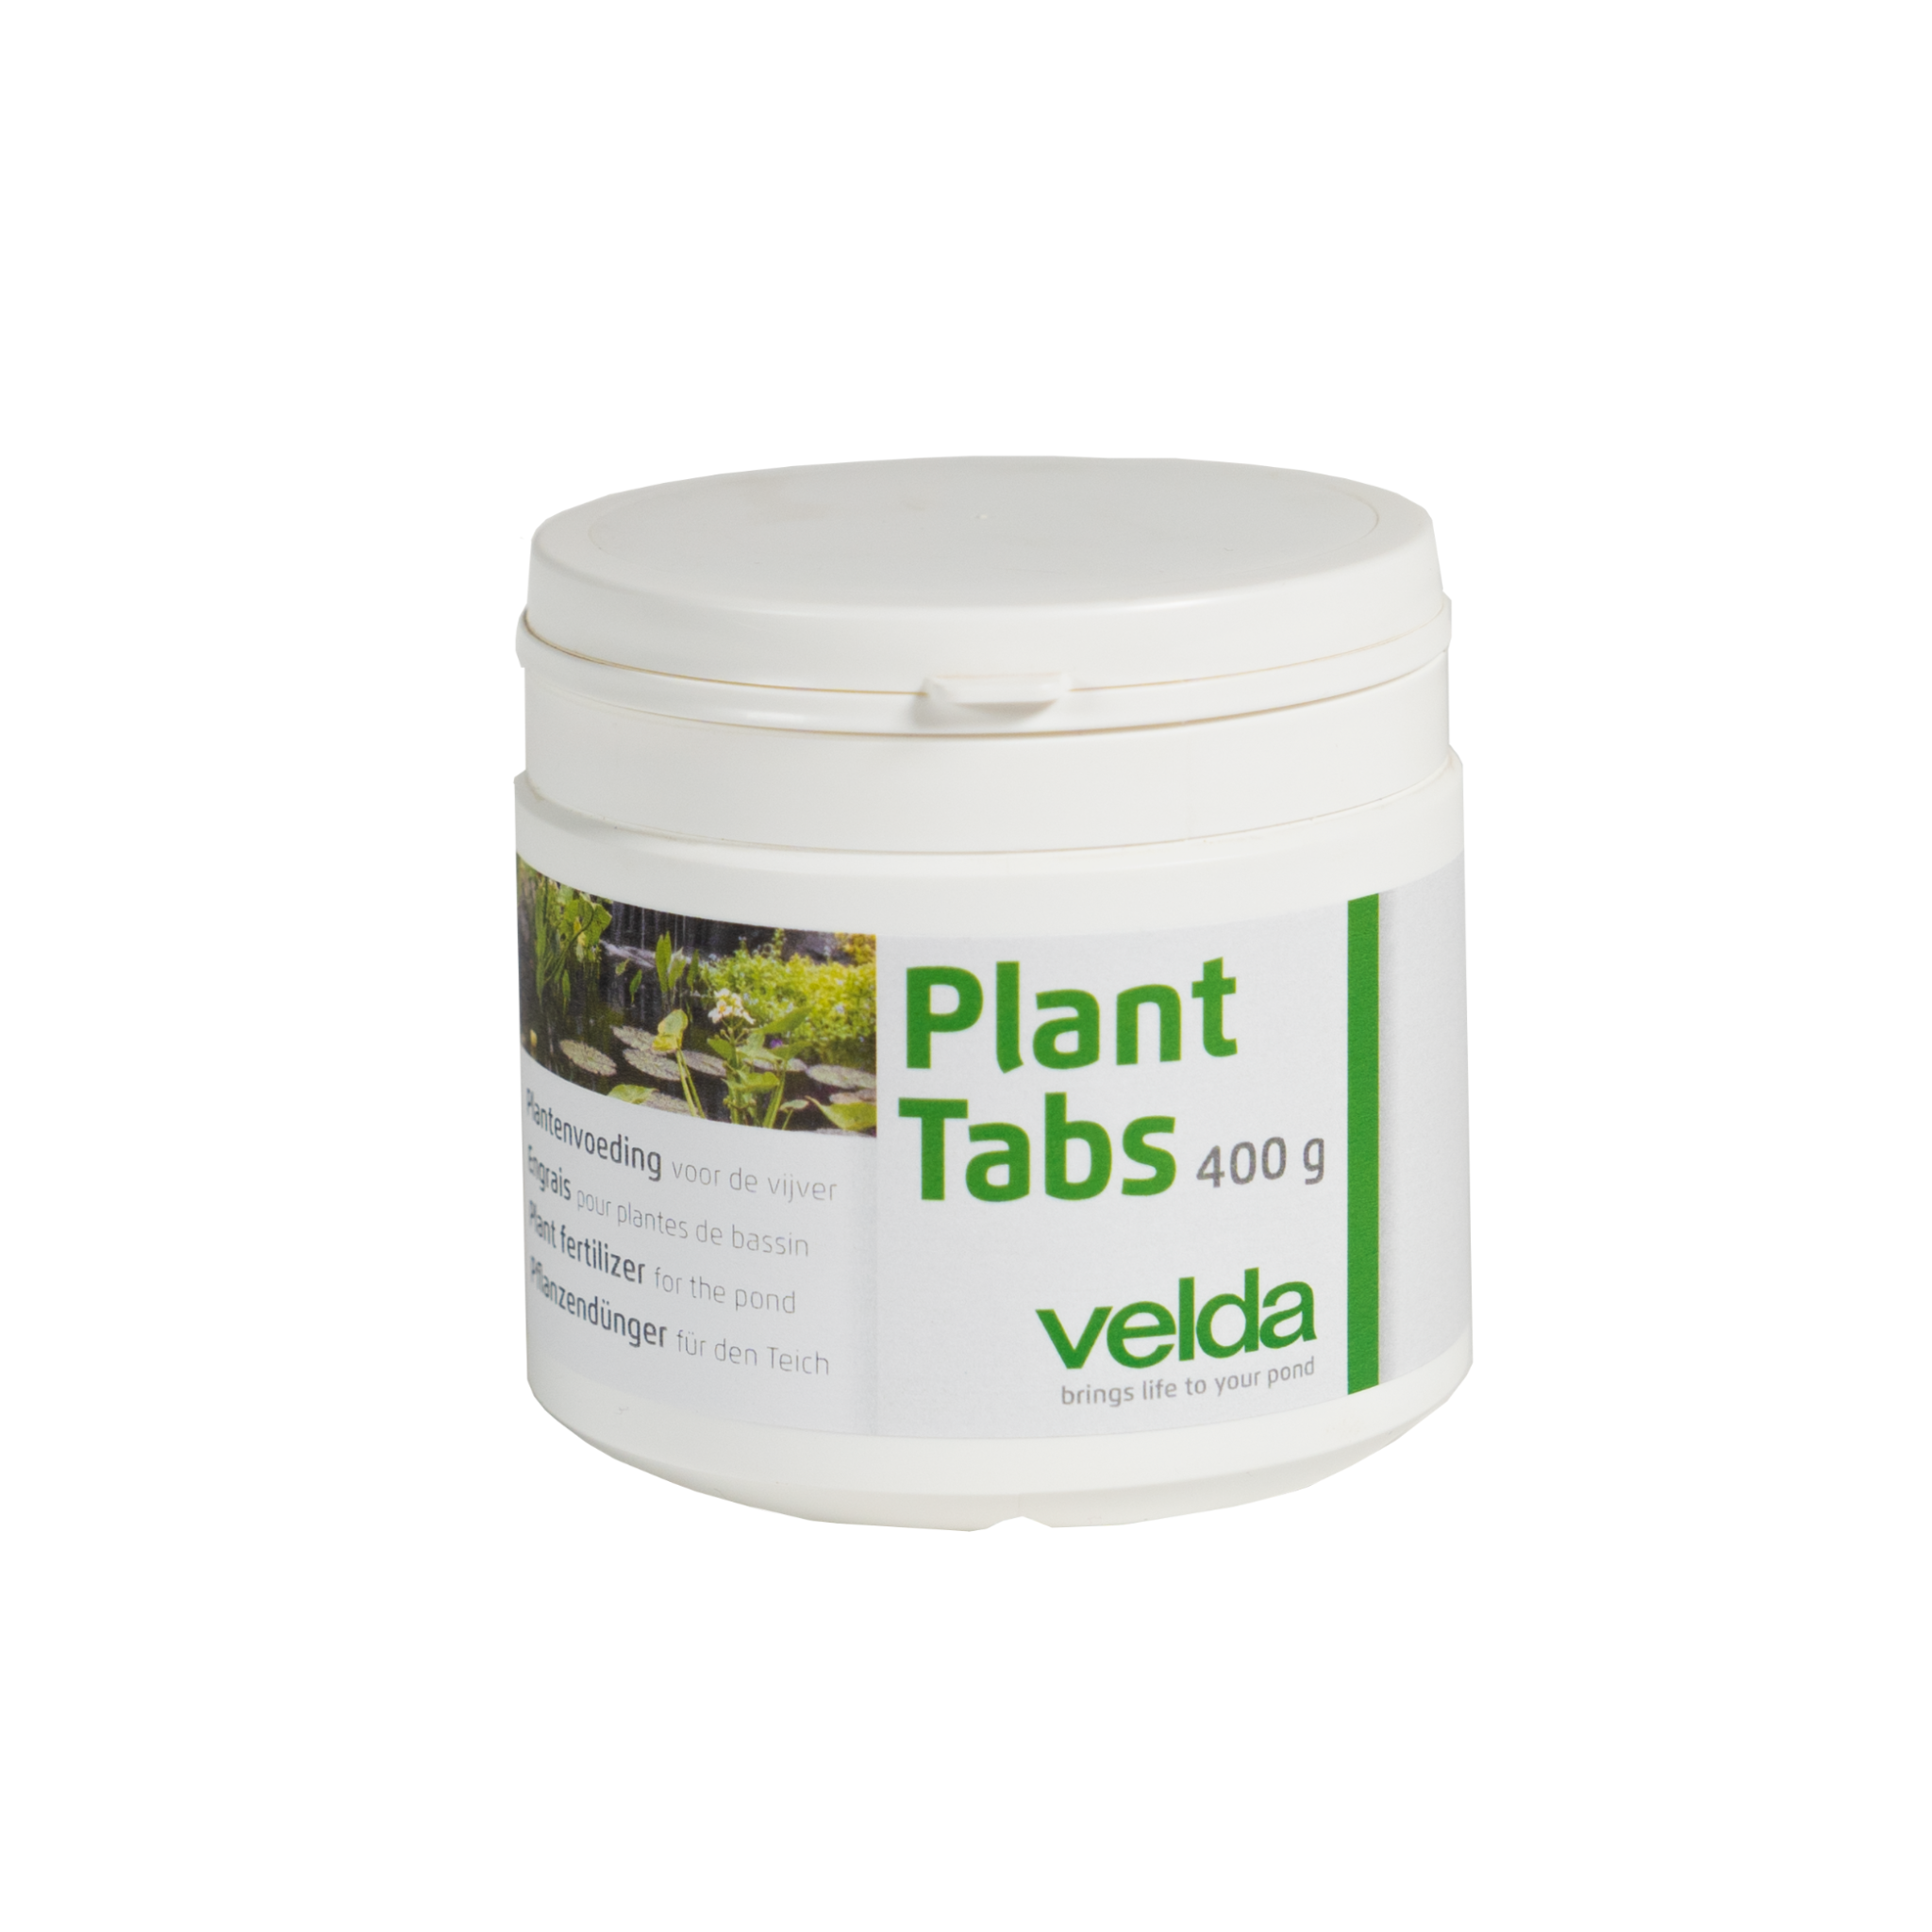 Plant Tabs 400g